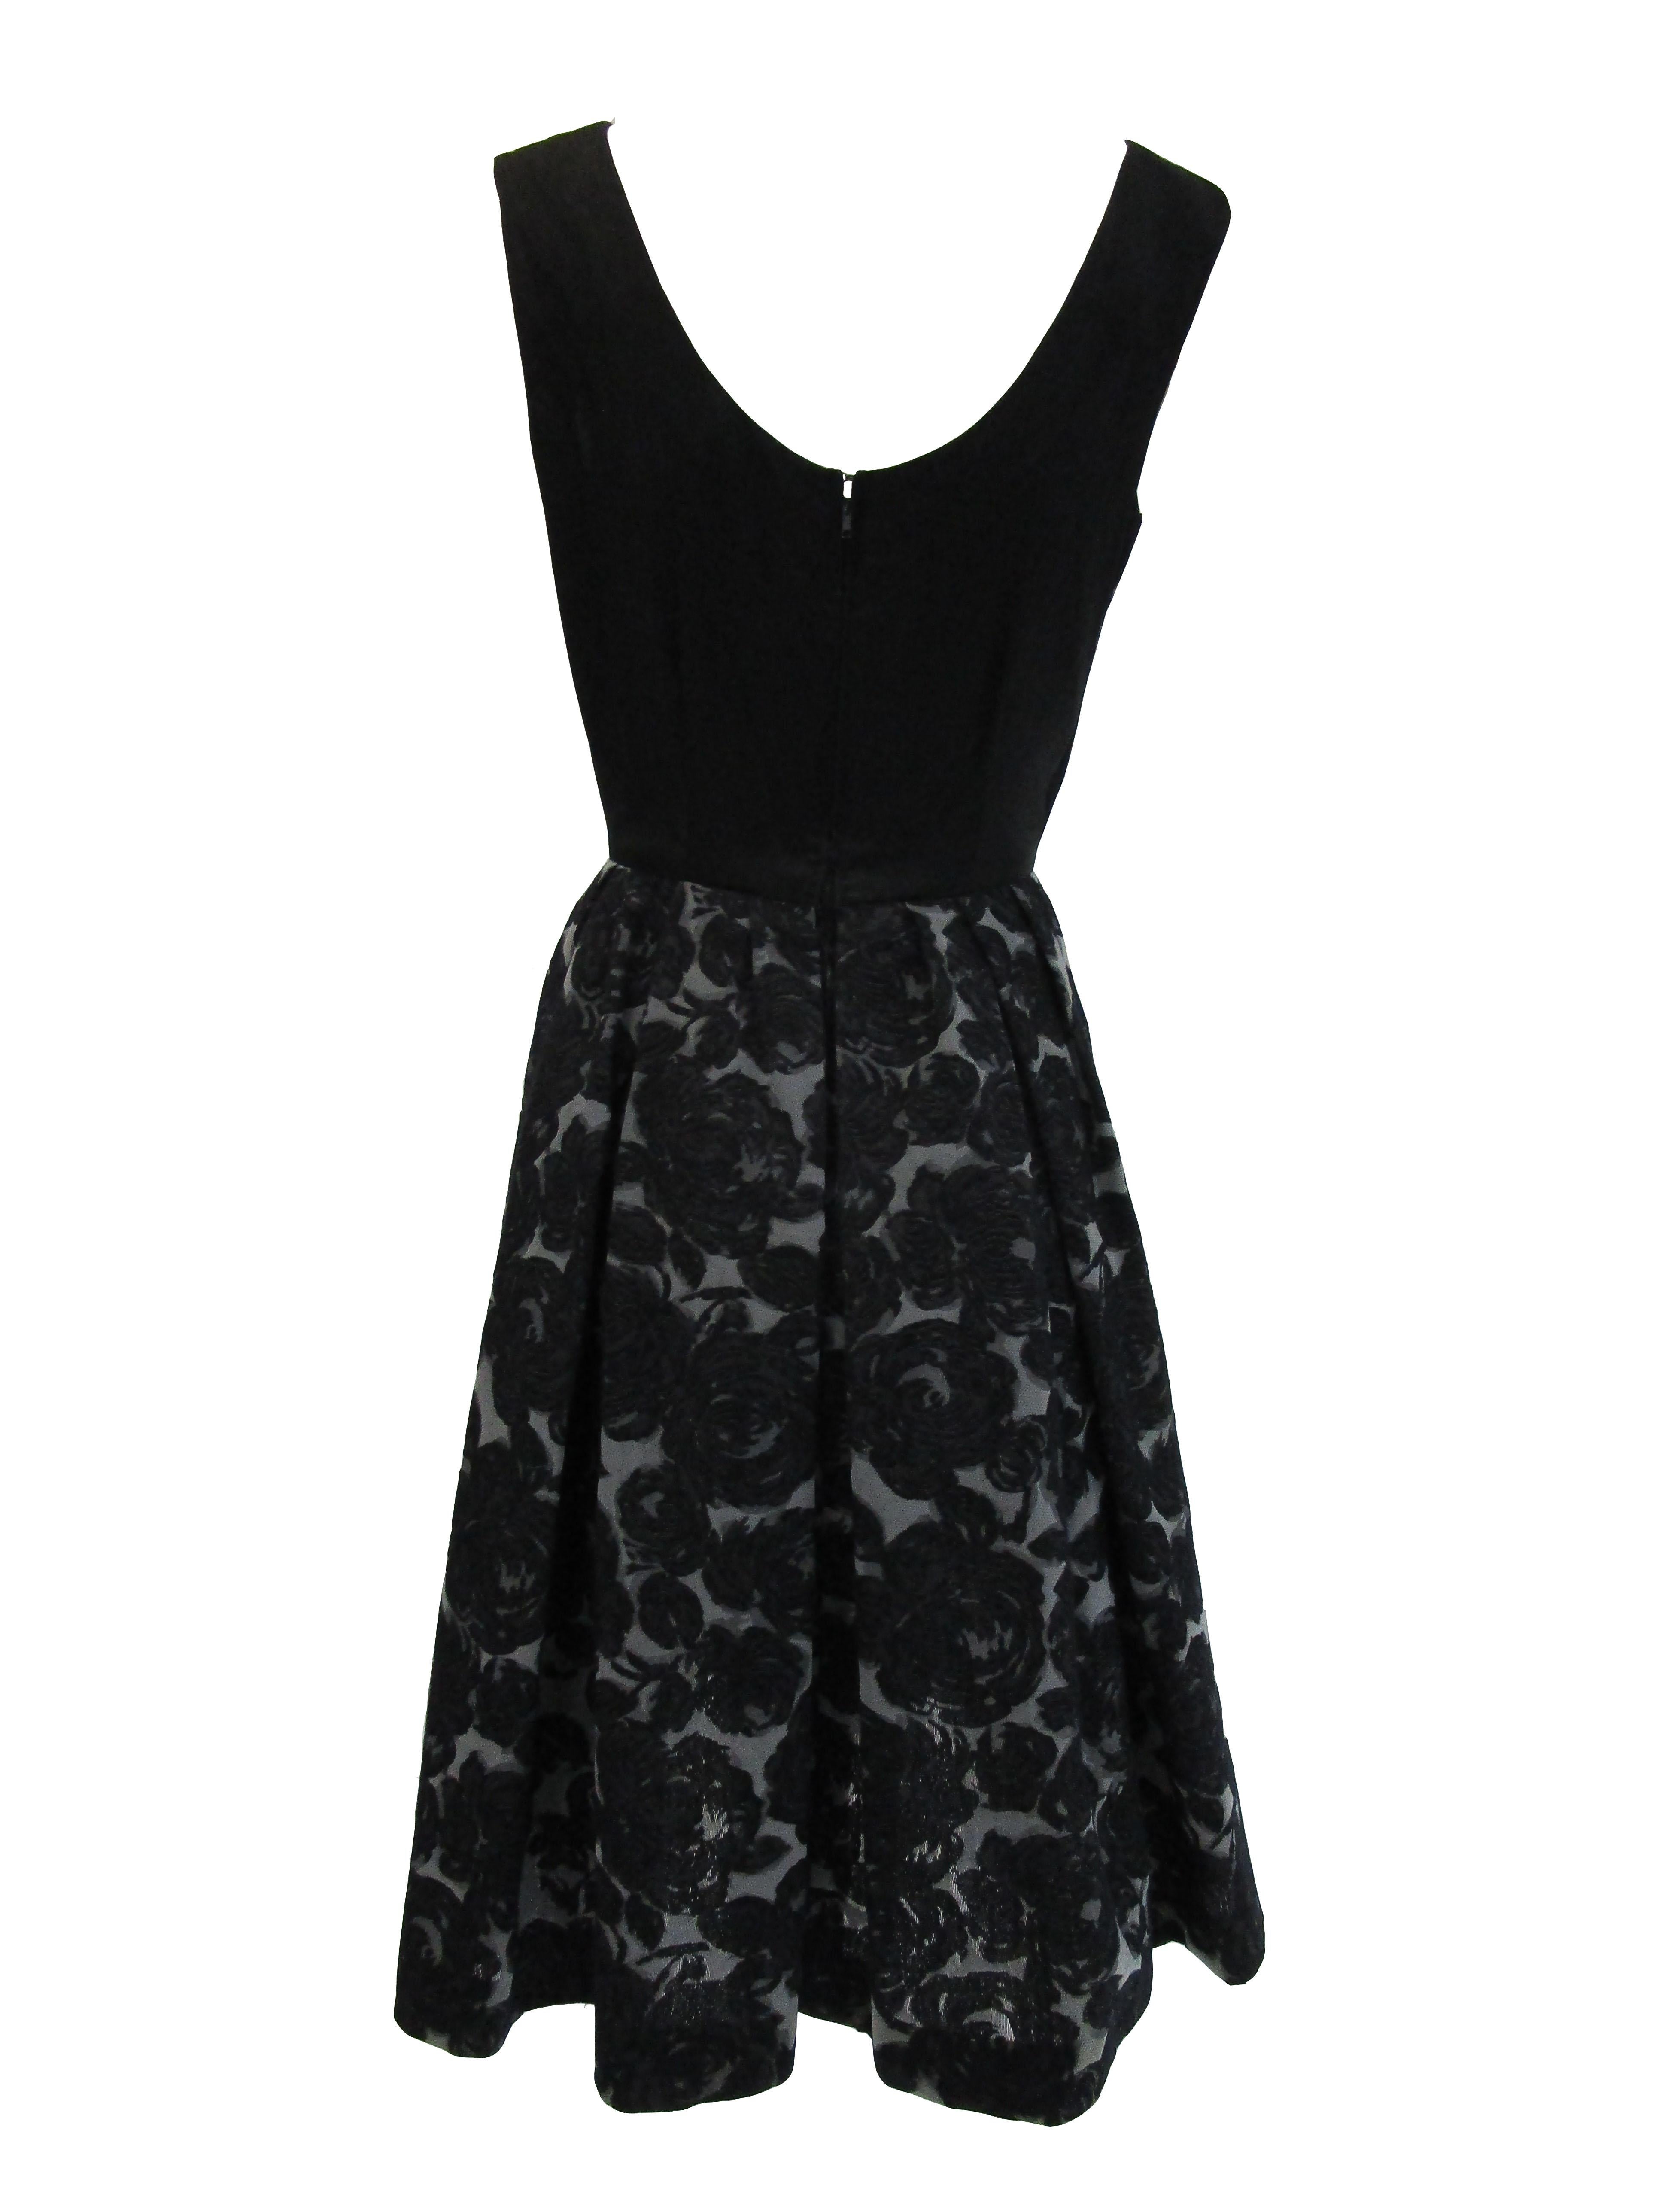 Women's Rare 1950s Madame Gres licensed Black & Grey Embroidered Dress w/ Bolero Jacket For Sale